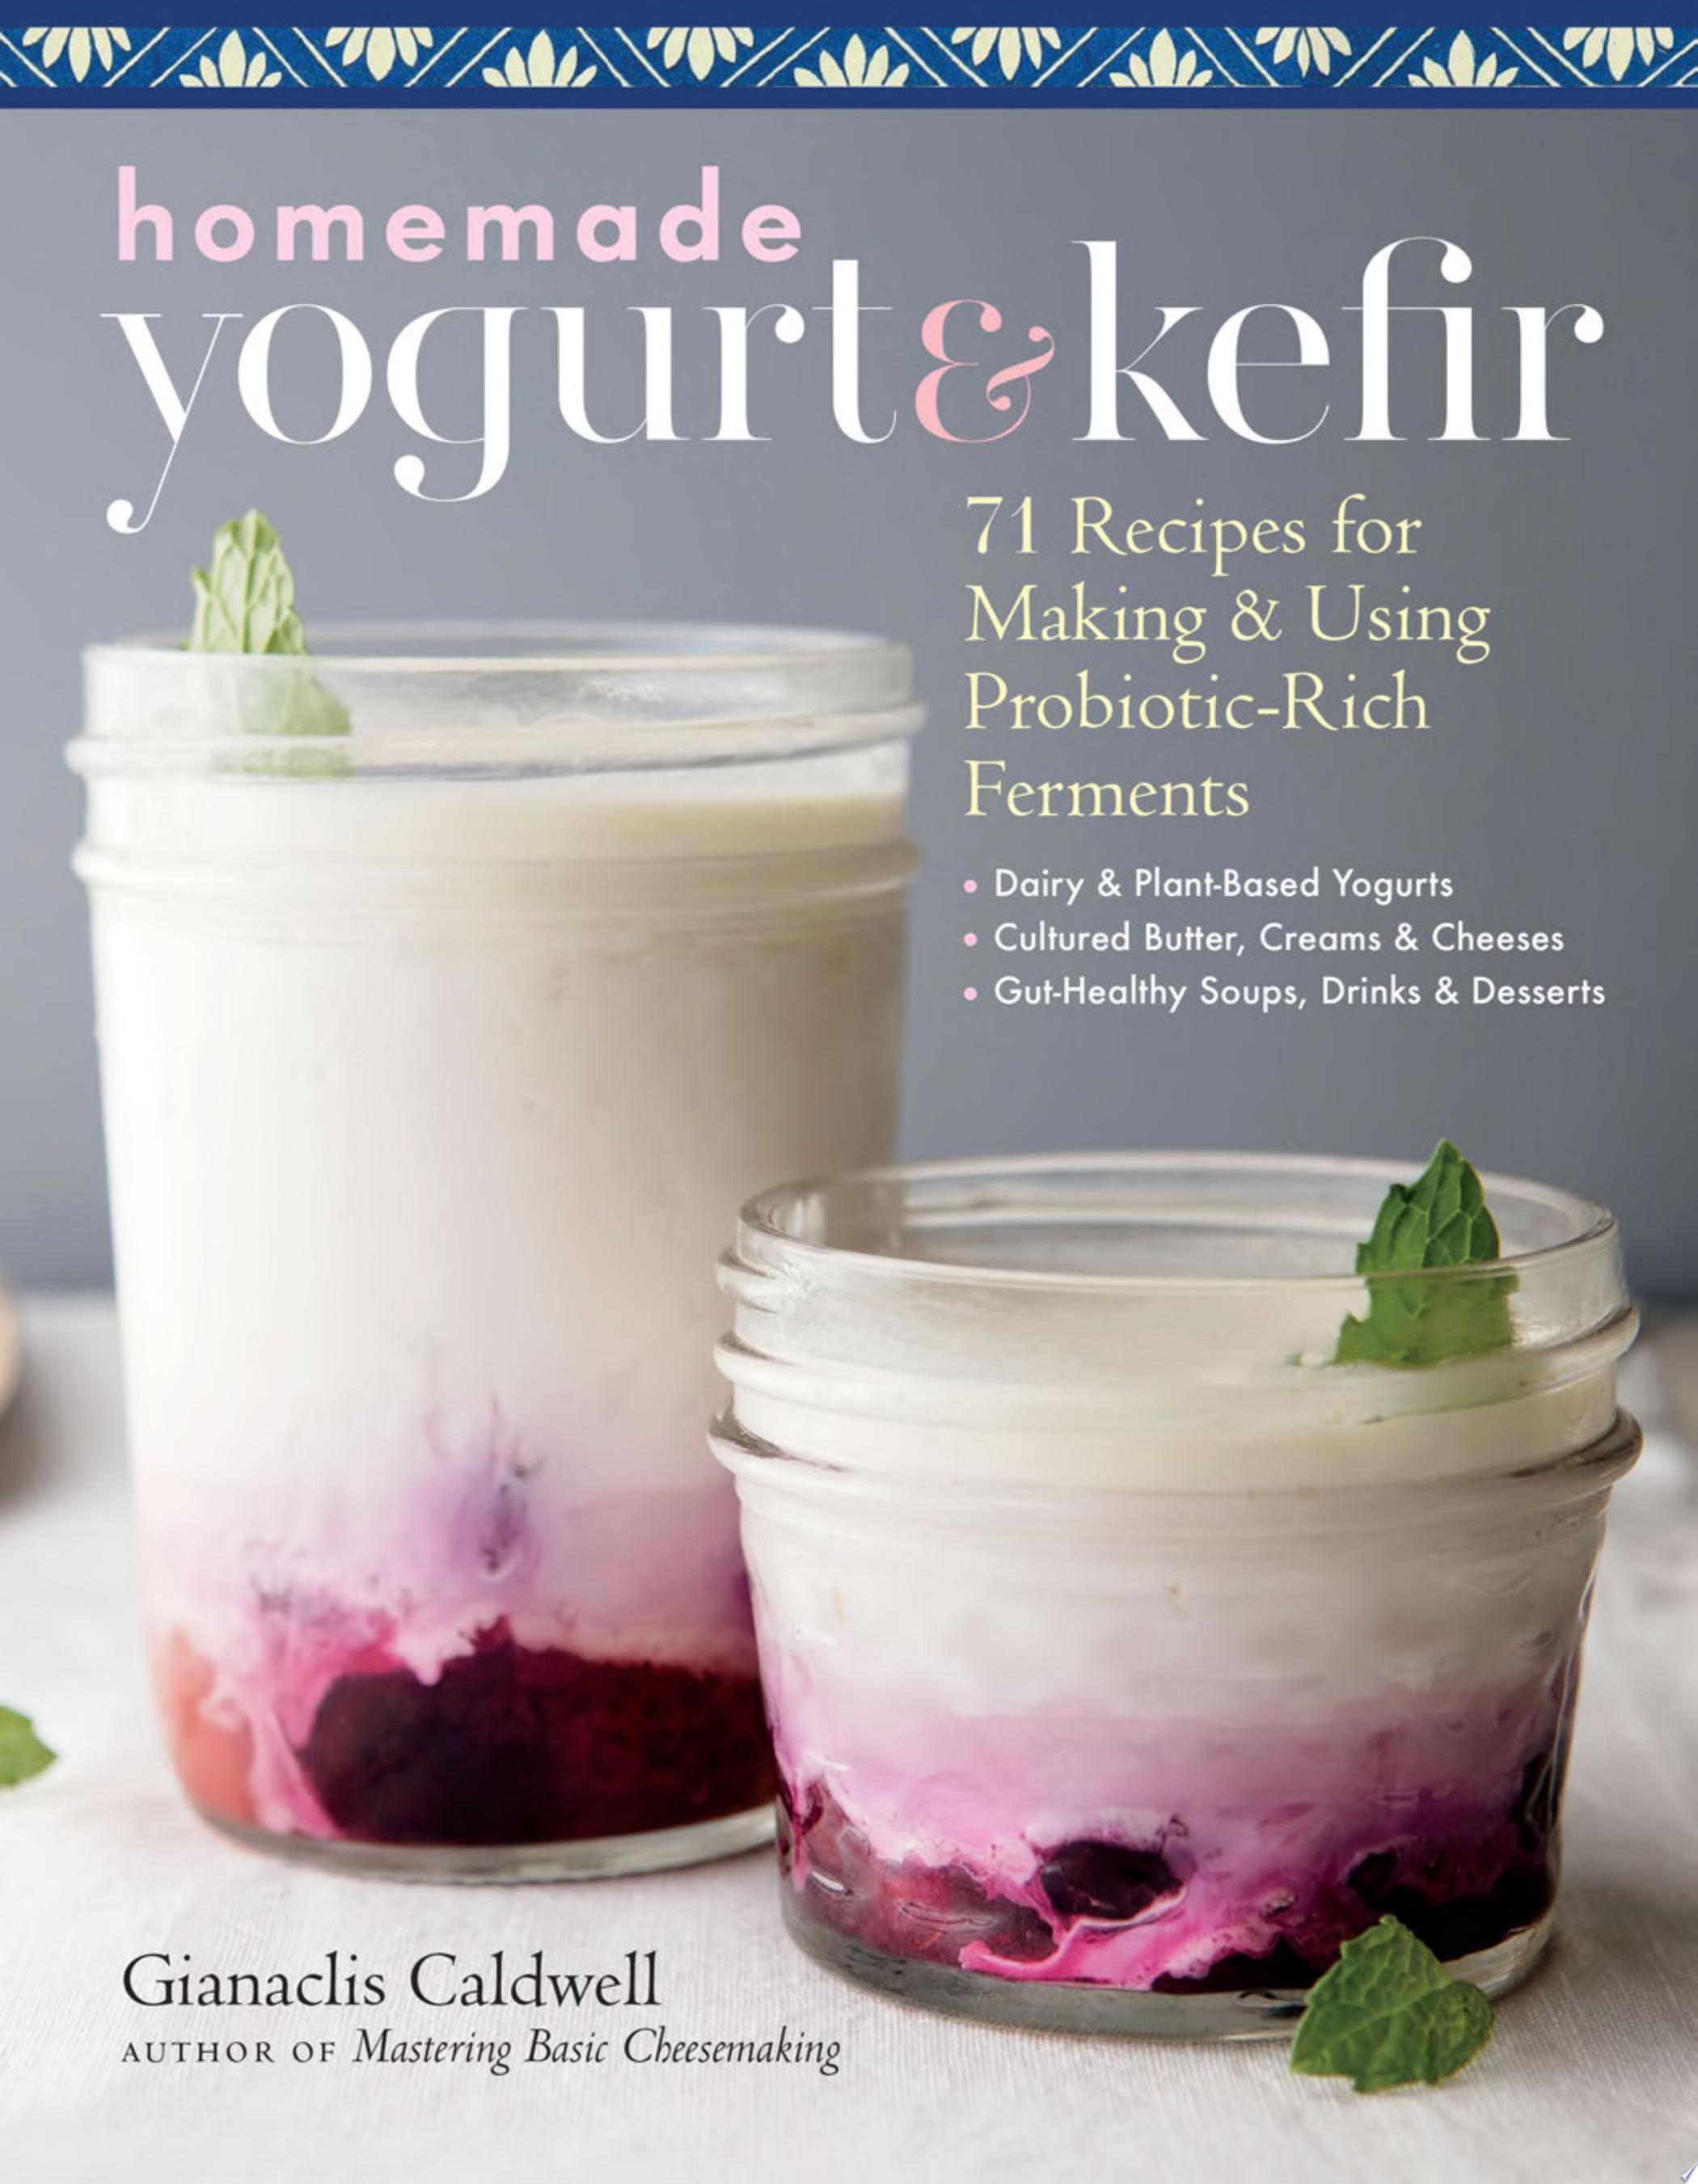 Image for "Homemade Yogurt &amp; Kefir"